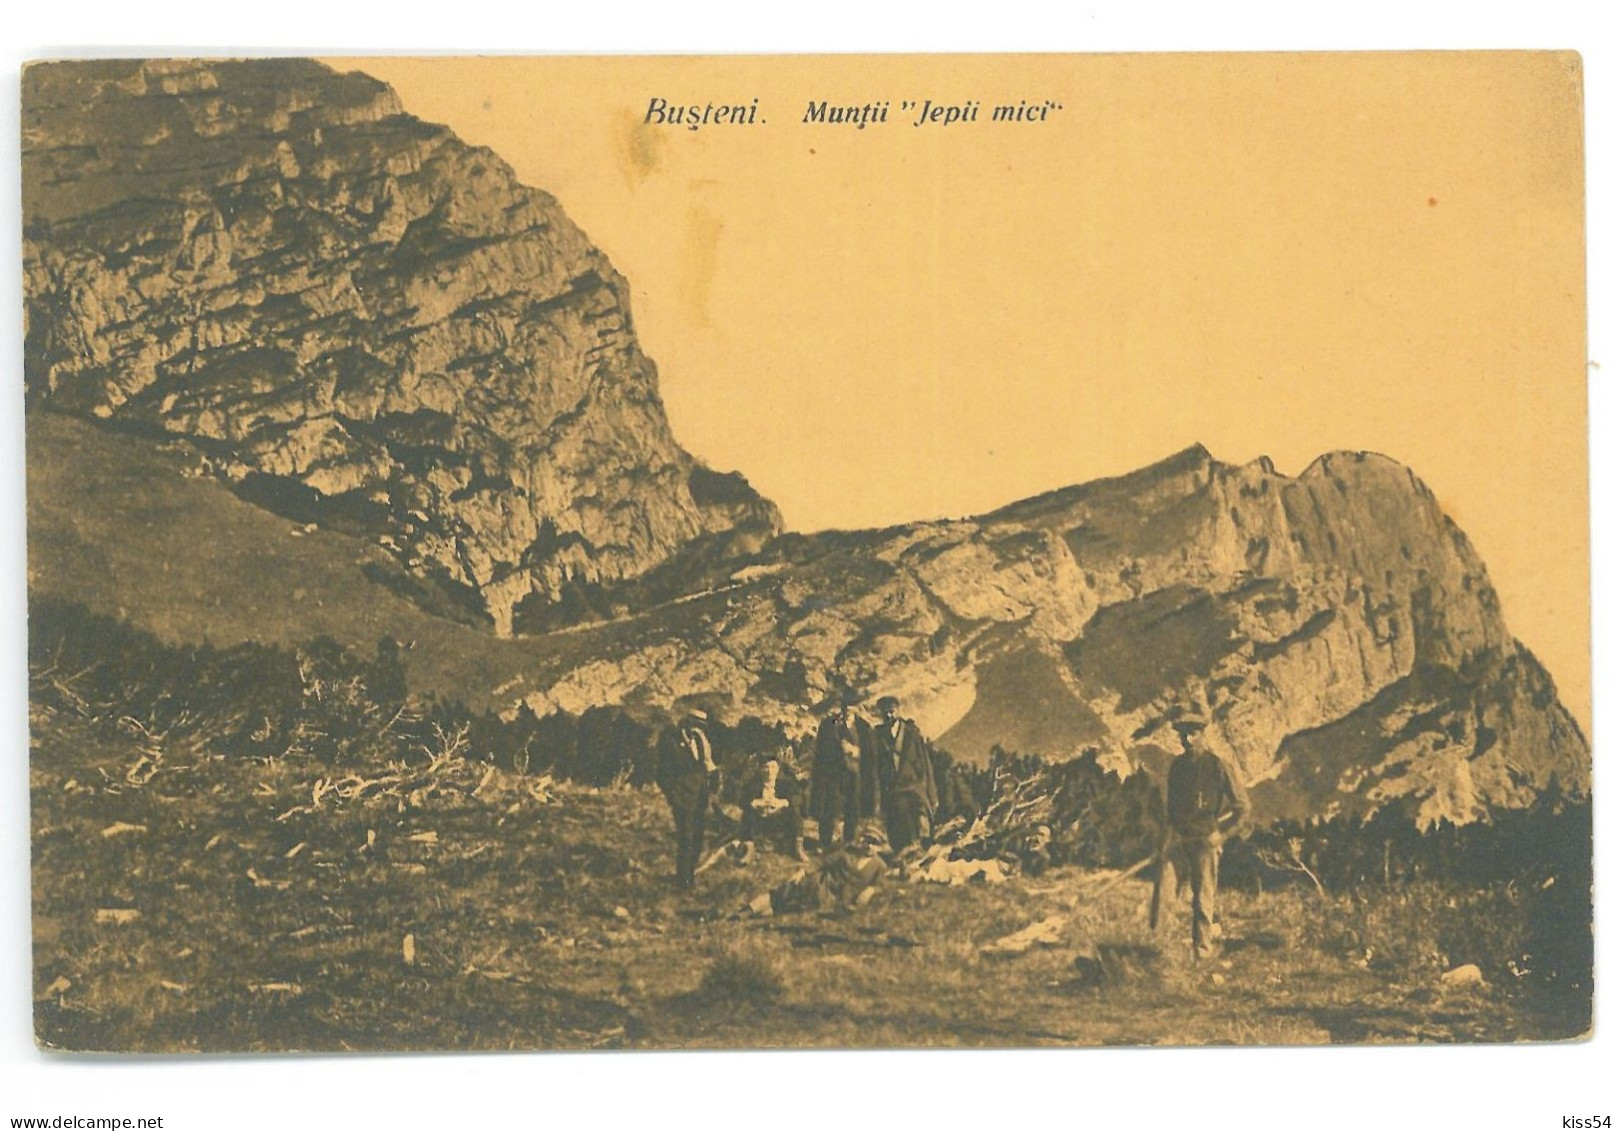 RO - 25190 BUSTENI, Prahova, Jepii Mici Mountain, Romania - Old Postcard - Unused - Roumanie